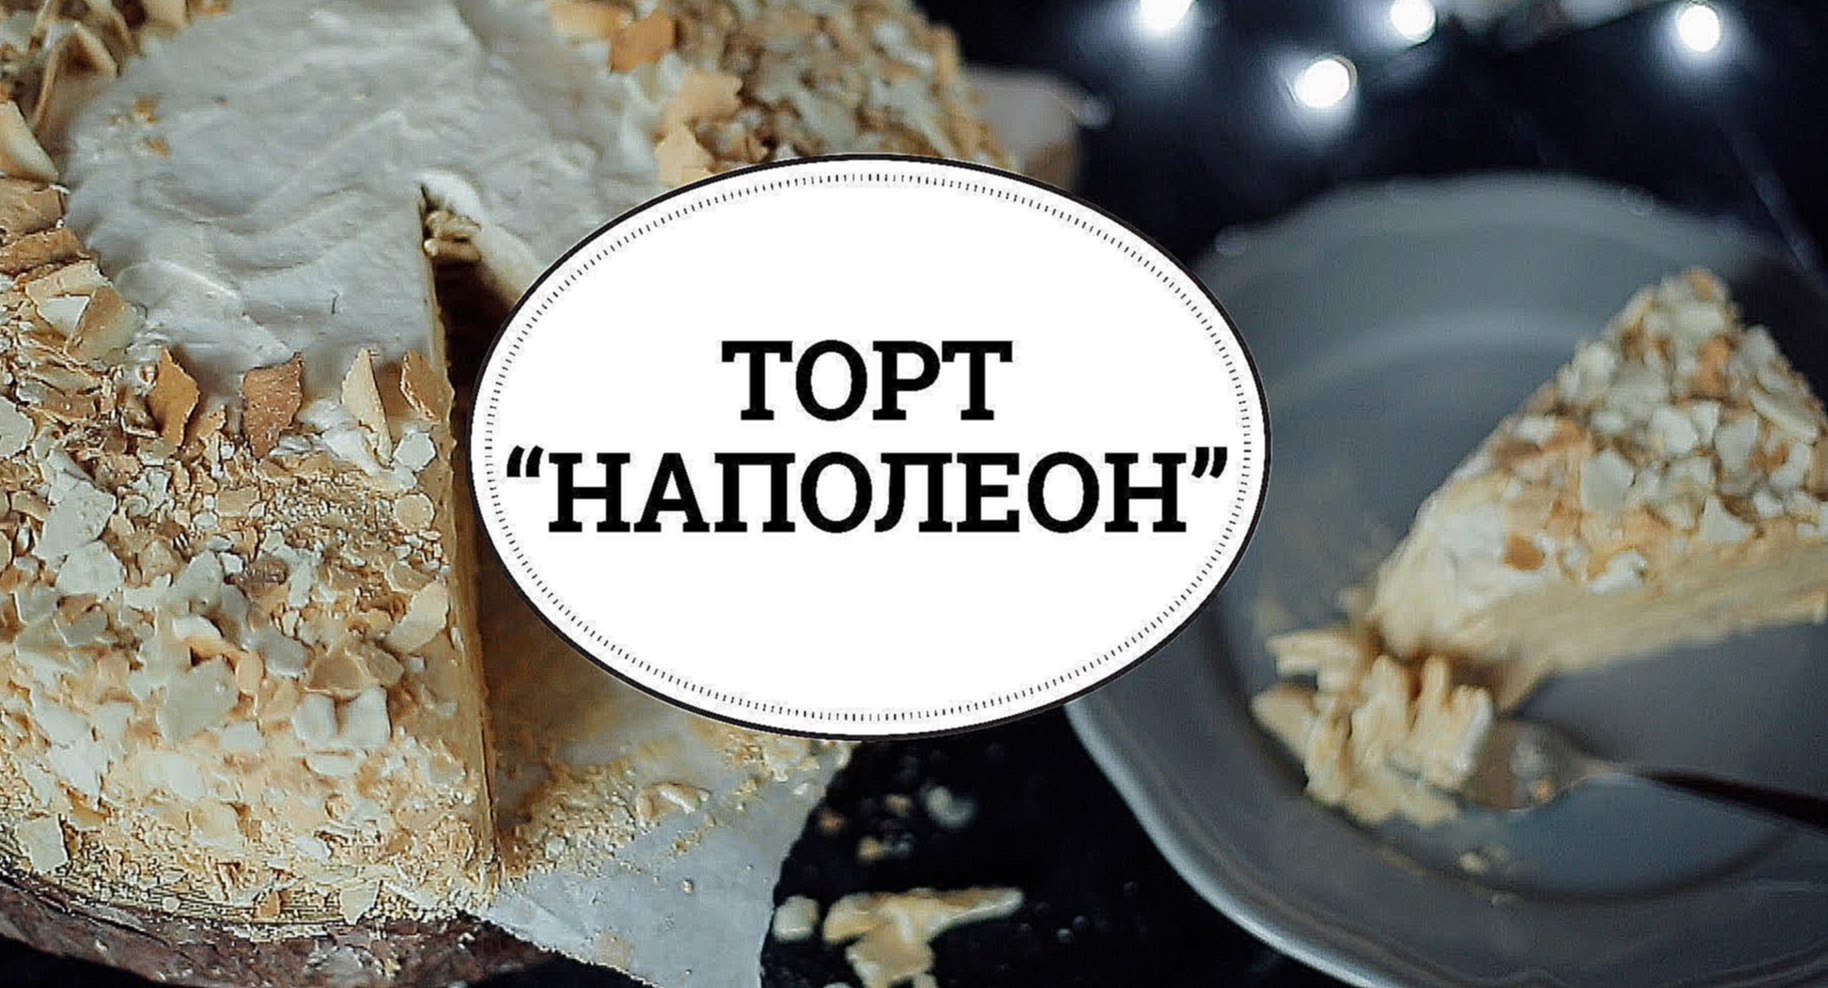 Торт "Наполеон" [sweet & flour] 